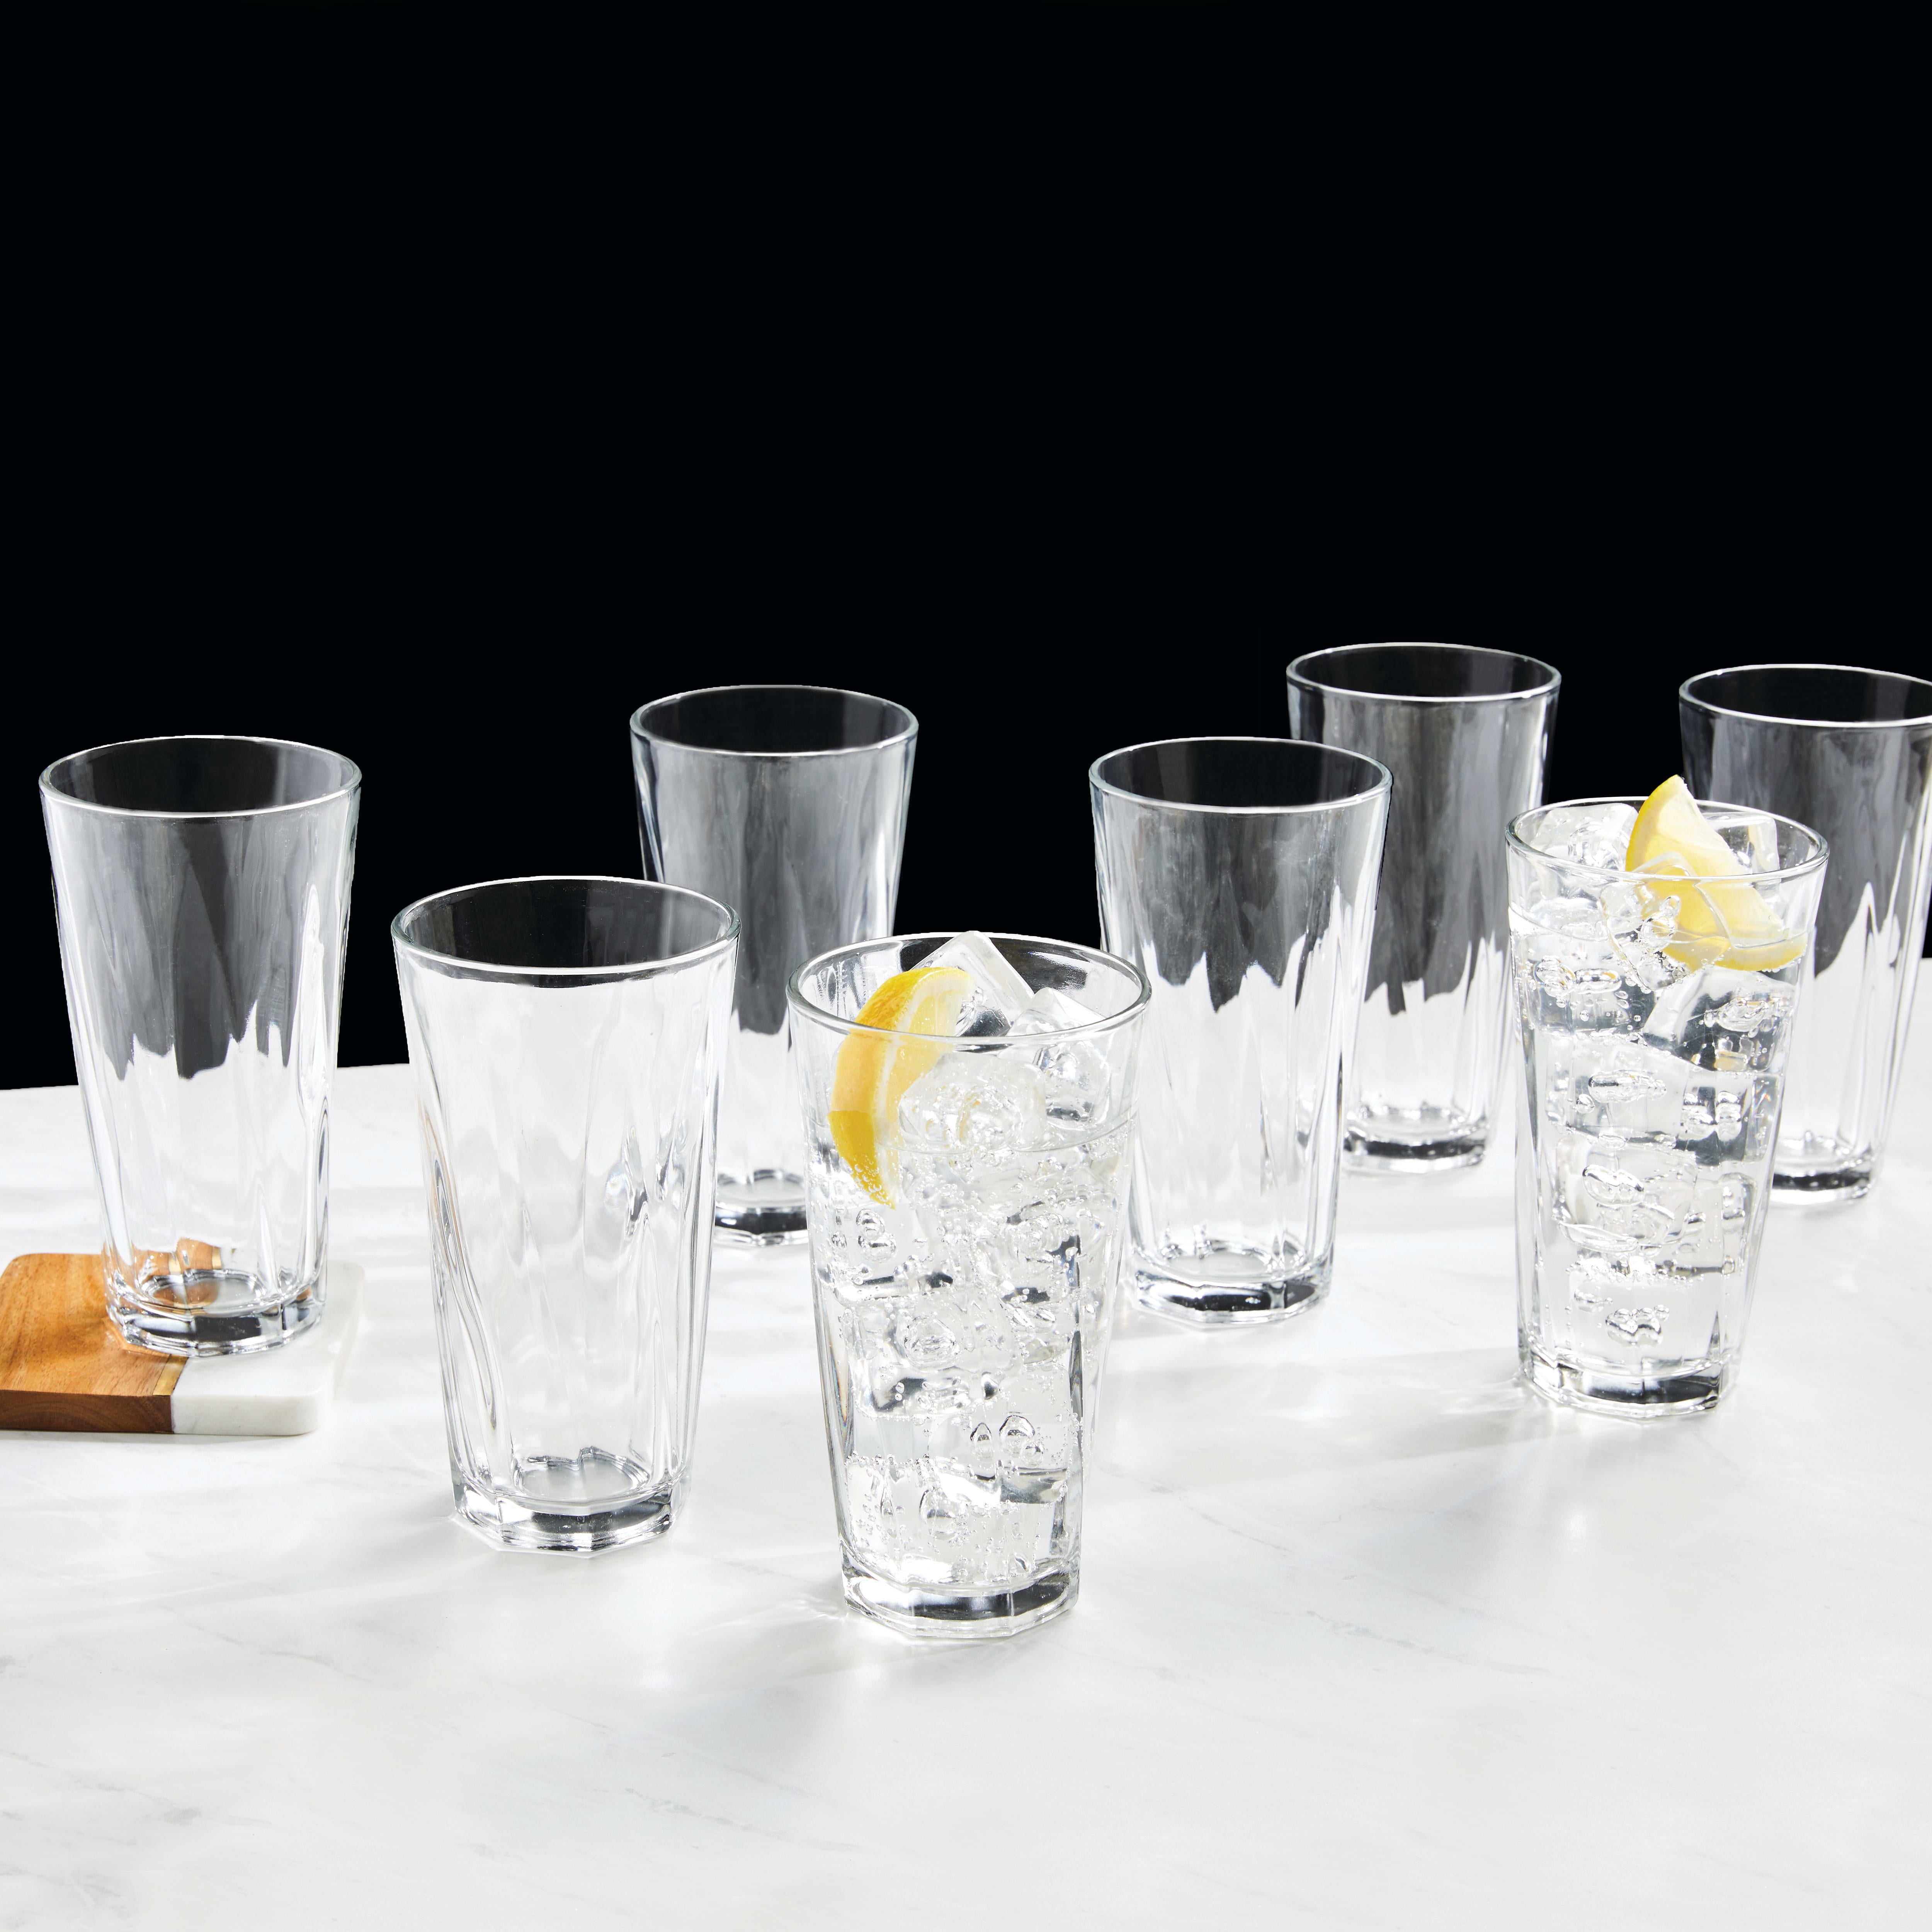 Better Homes & Gardens Reeve Drinking Glasses, 17 oz, Set of 8